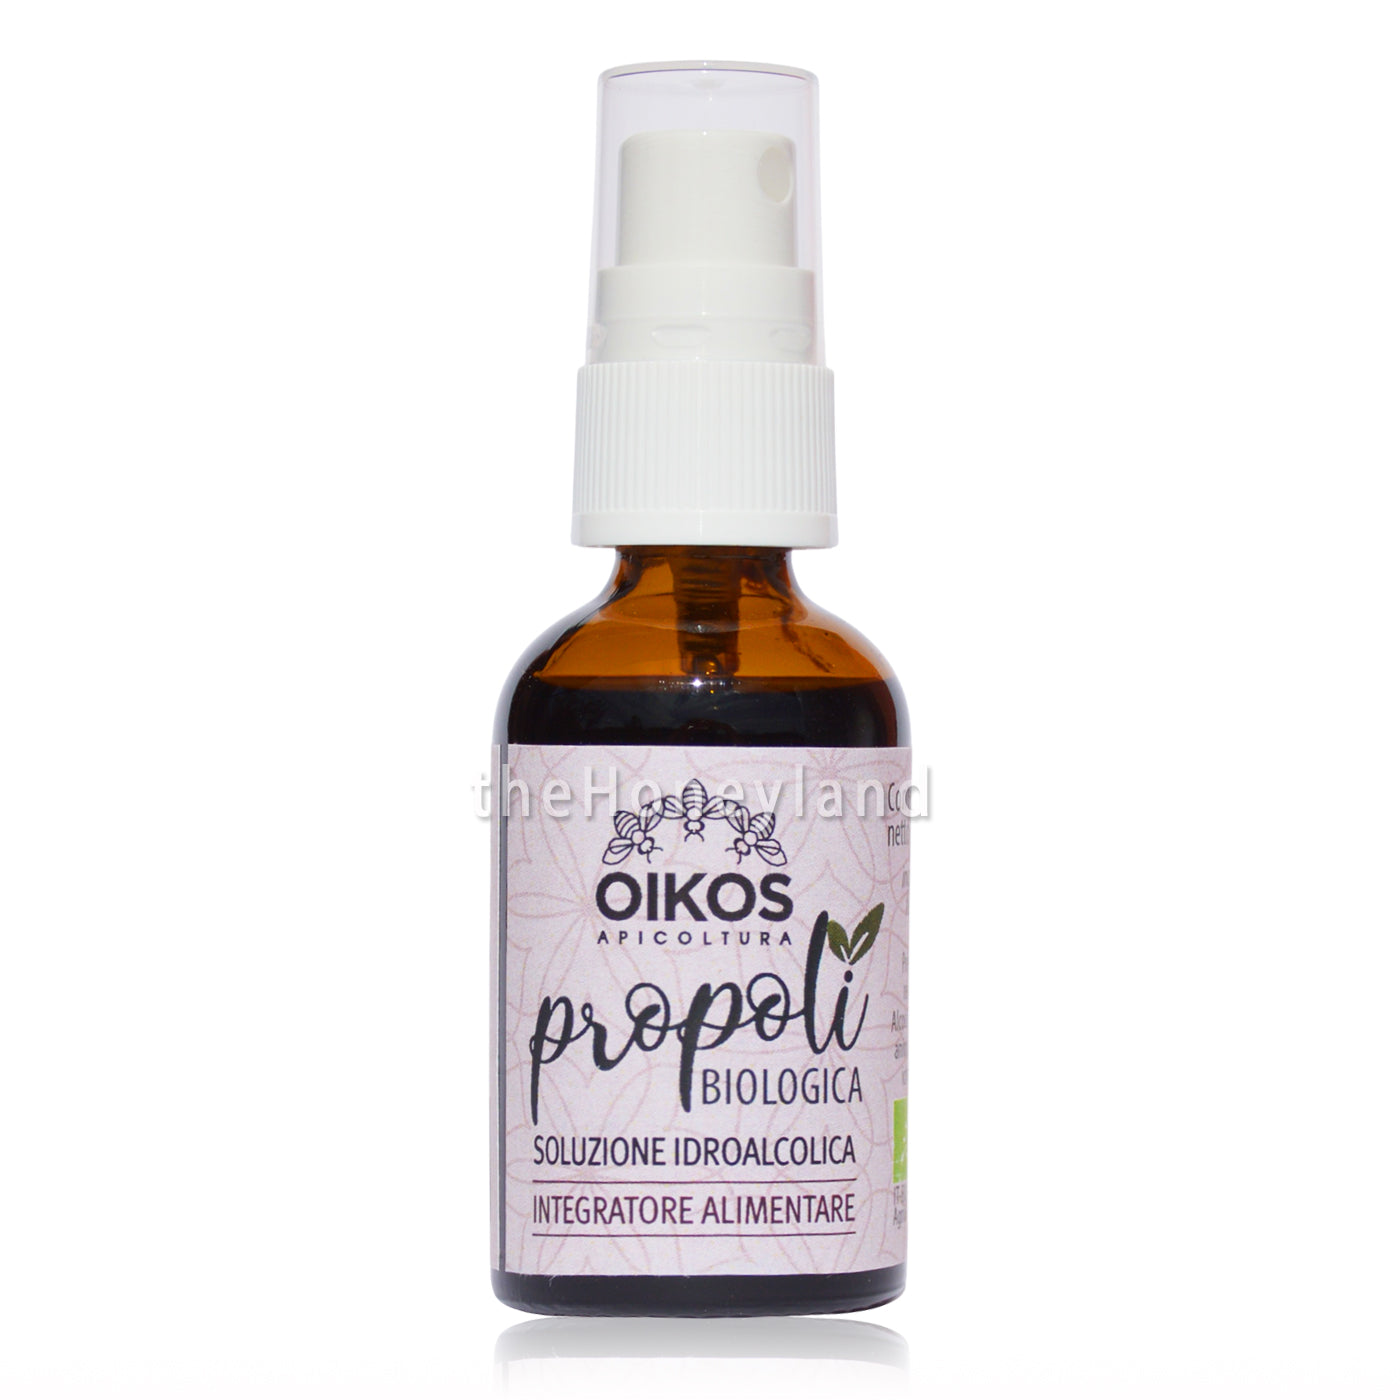 Organic propolis throat spray with 30% raw propolis